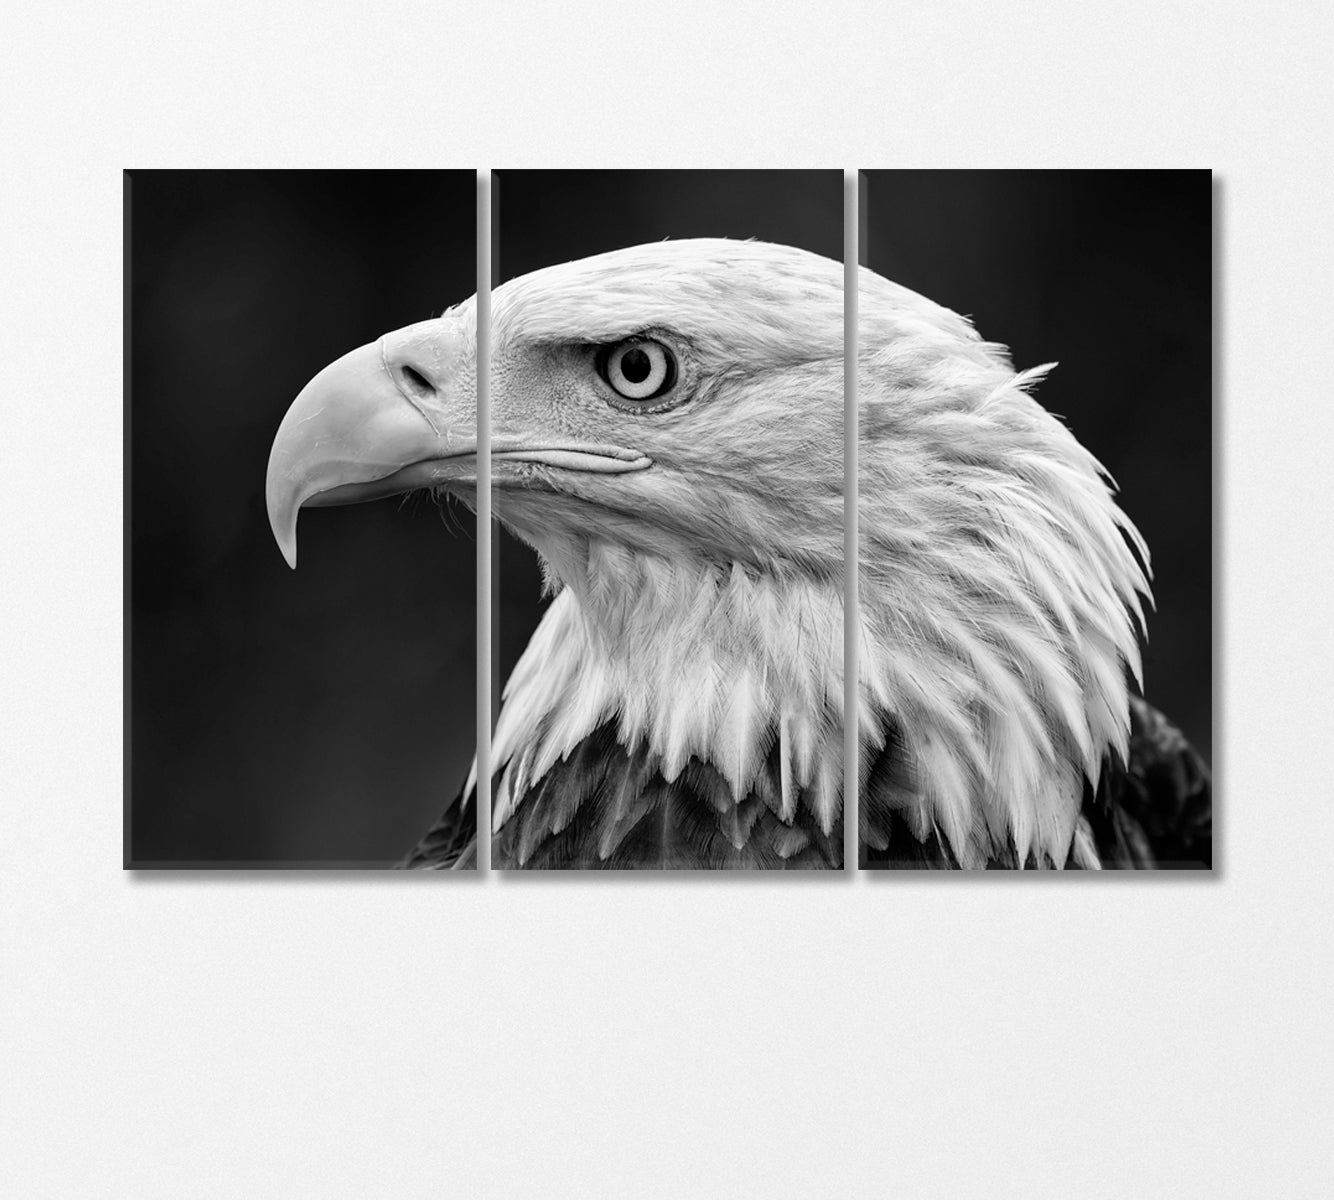 Bald Eagle Portrait in Black and White Canvas Print-Canvas Print-CetArt-3 Panels-36x24 inches-CetArt